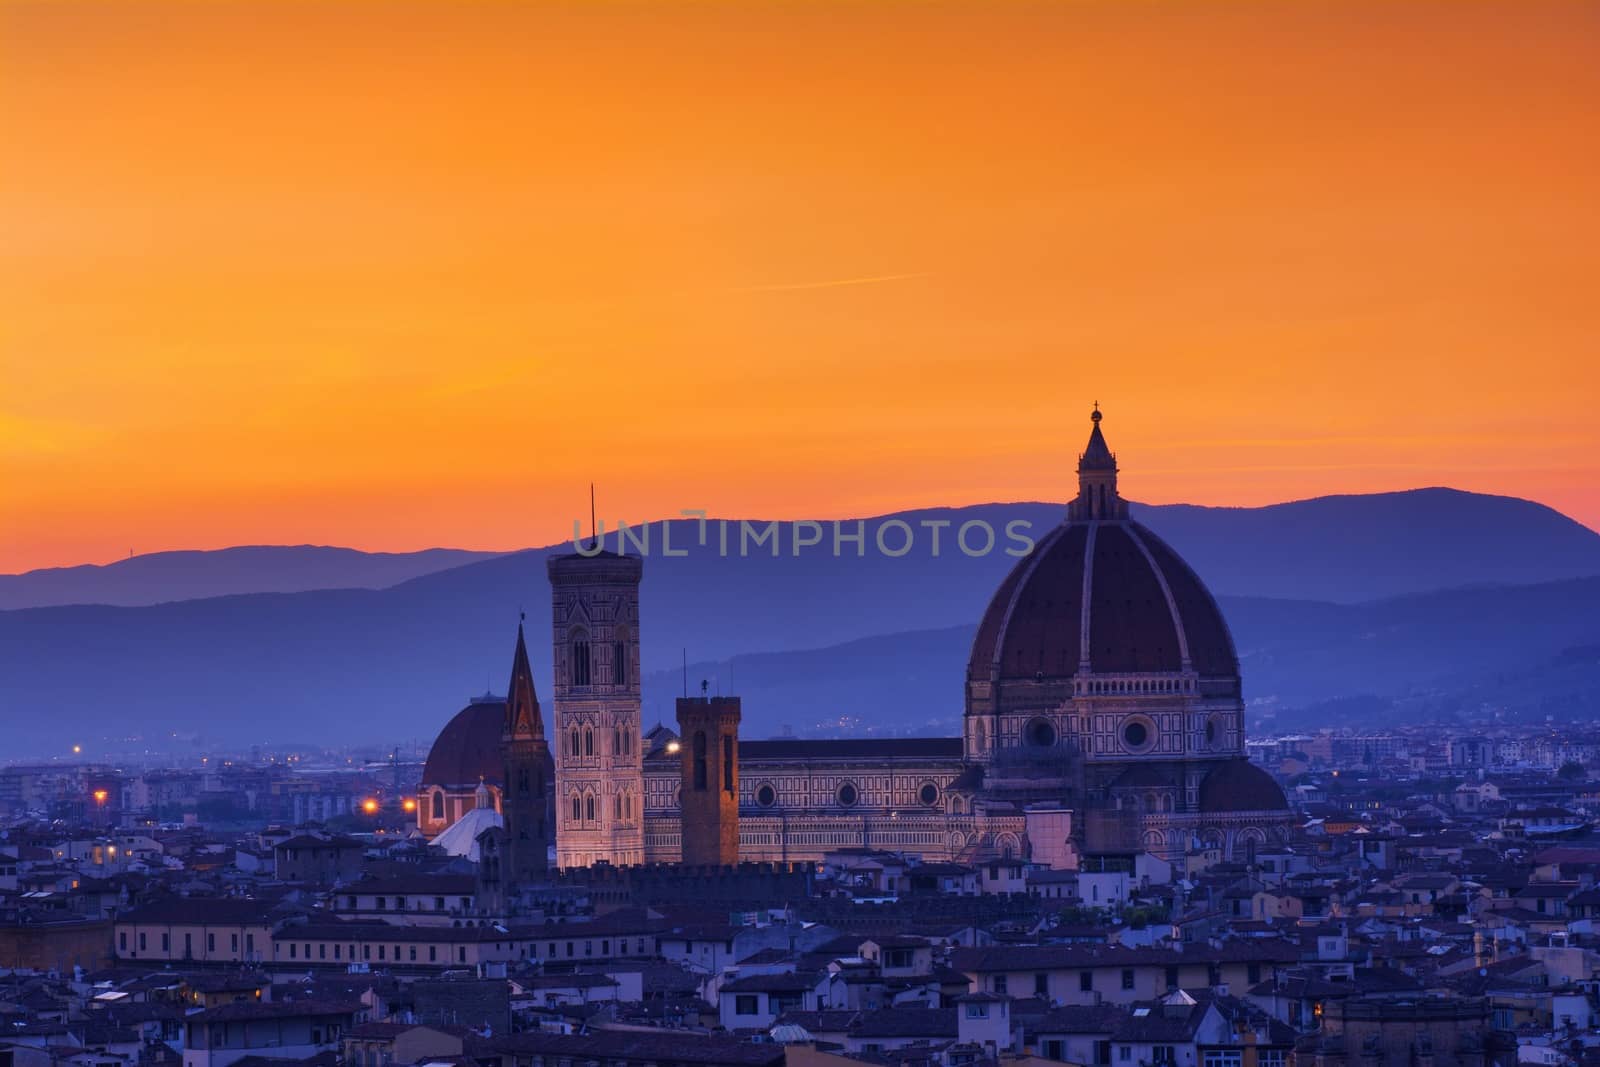 Duomo Santa Maria Del Fiore at sunset in Florence, Tuscany, Italy.